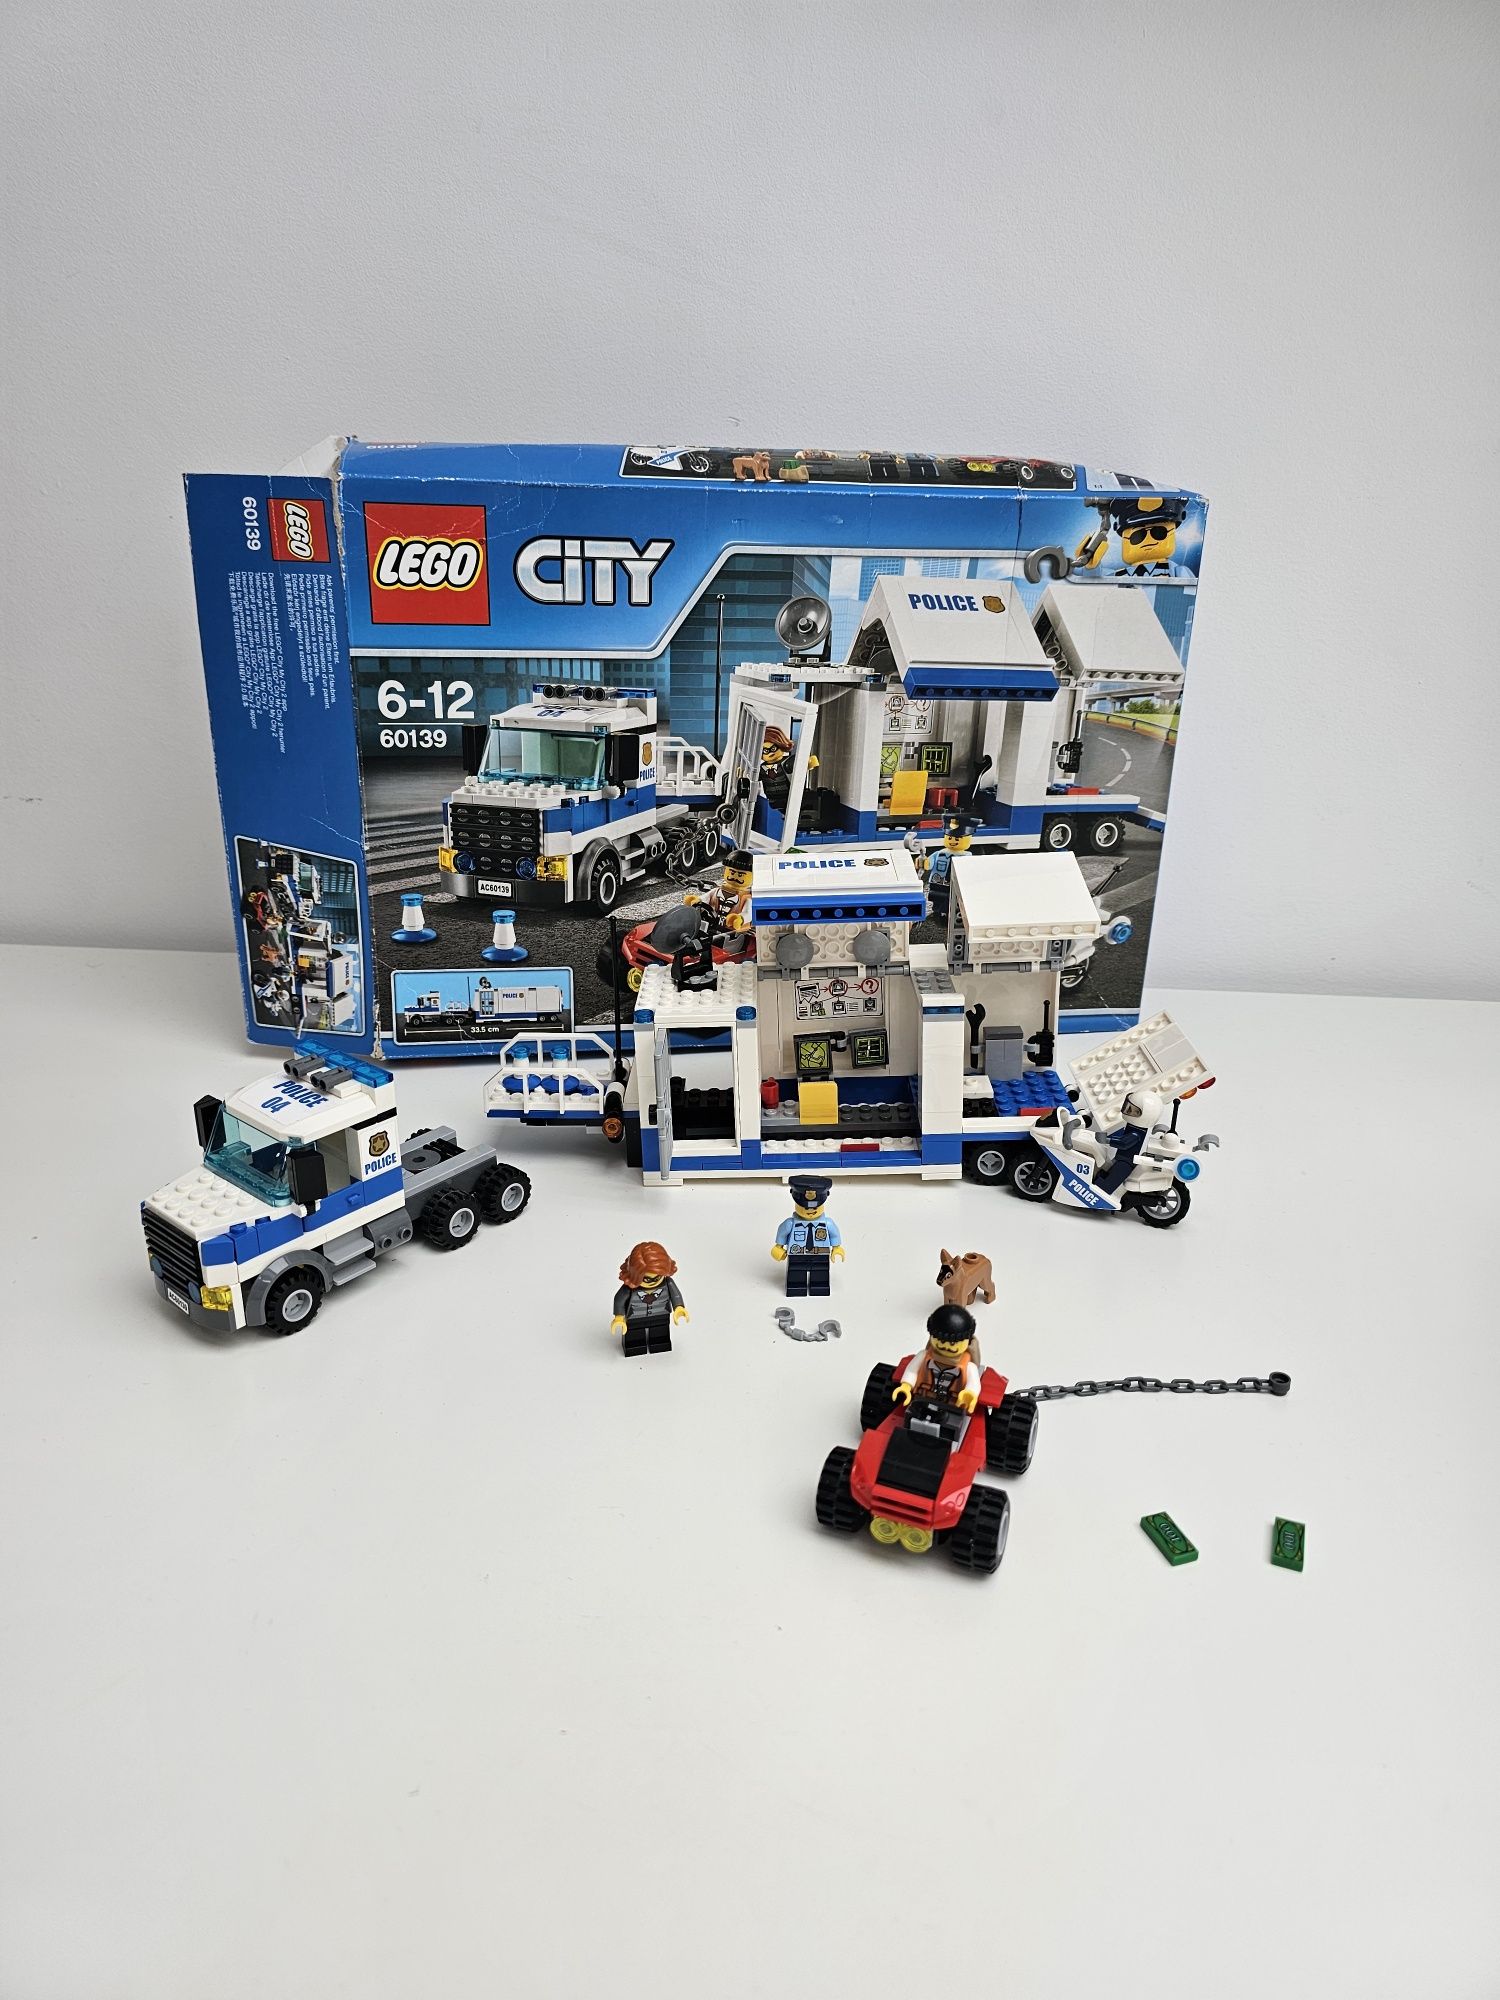 Lego City zestaw 60139 zestaw kompletny

Szybka wy